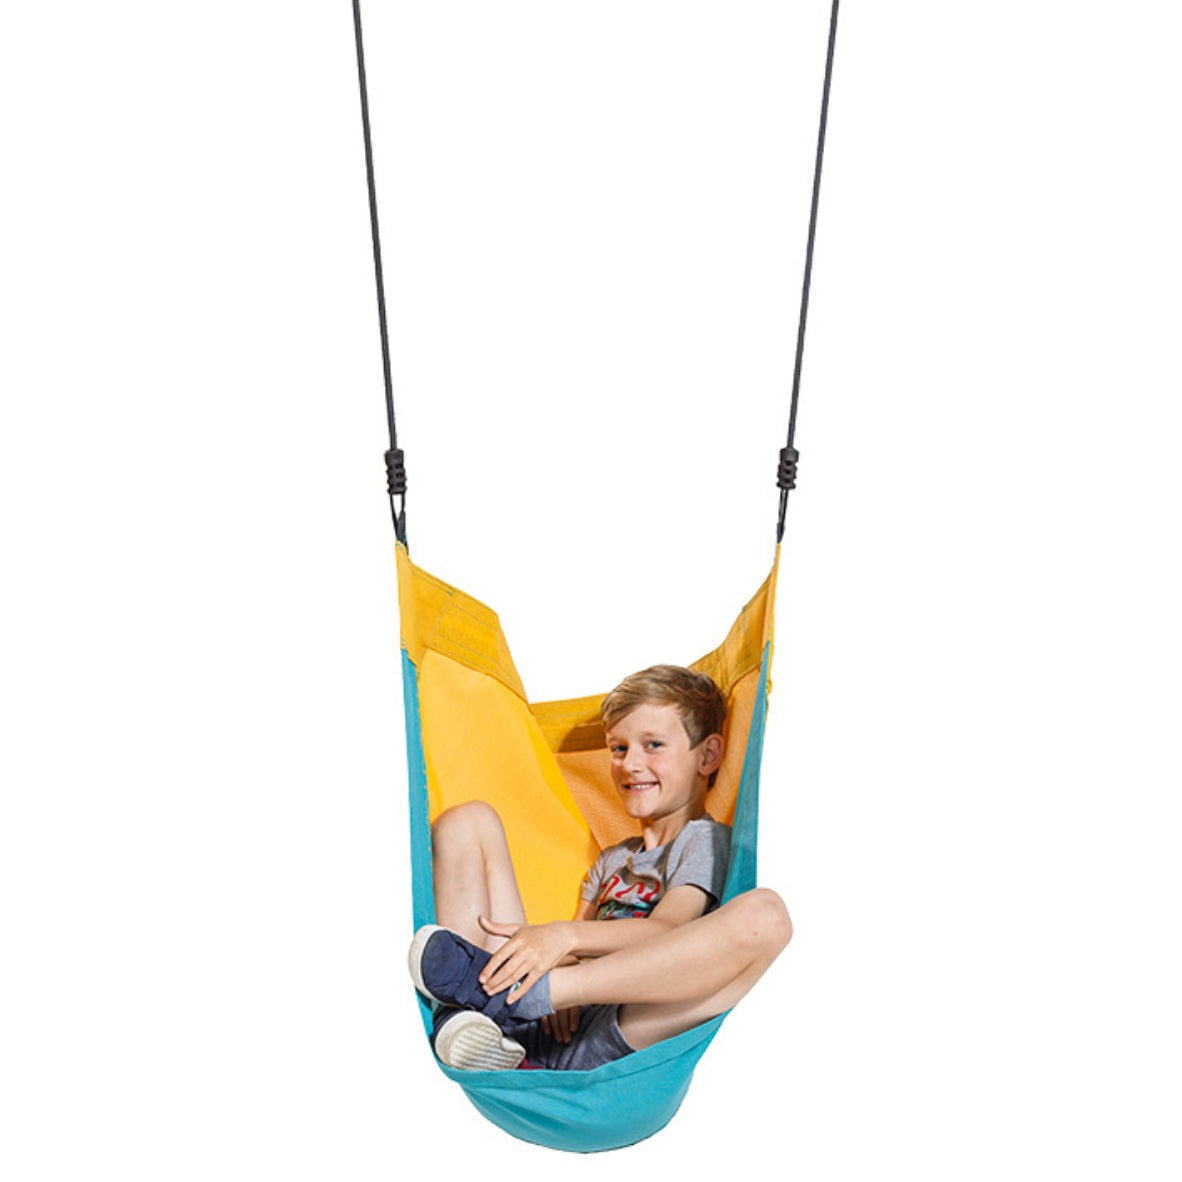 Hang Out-Hammock Swing